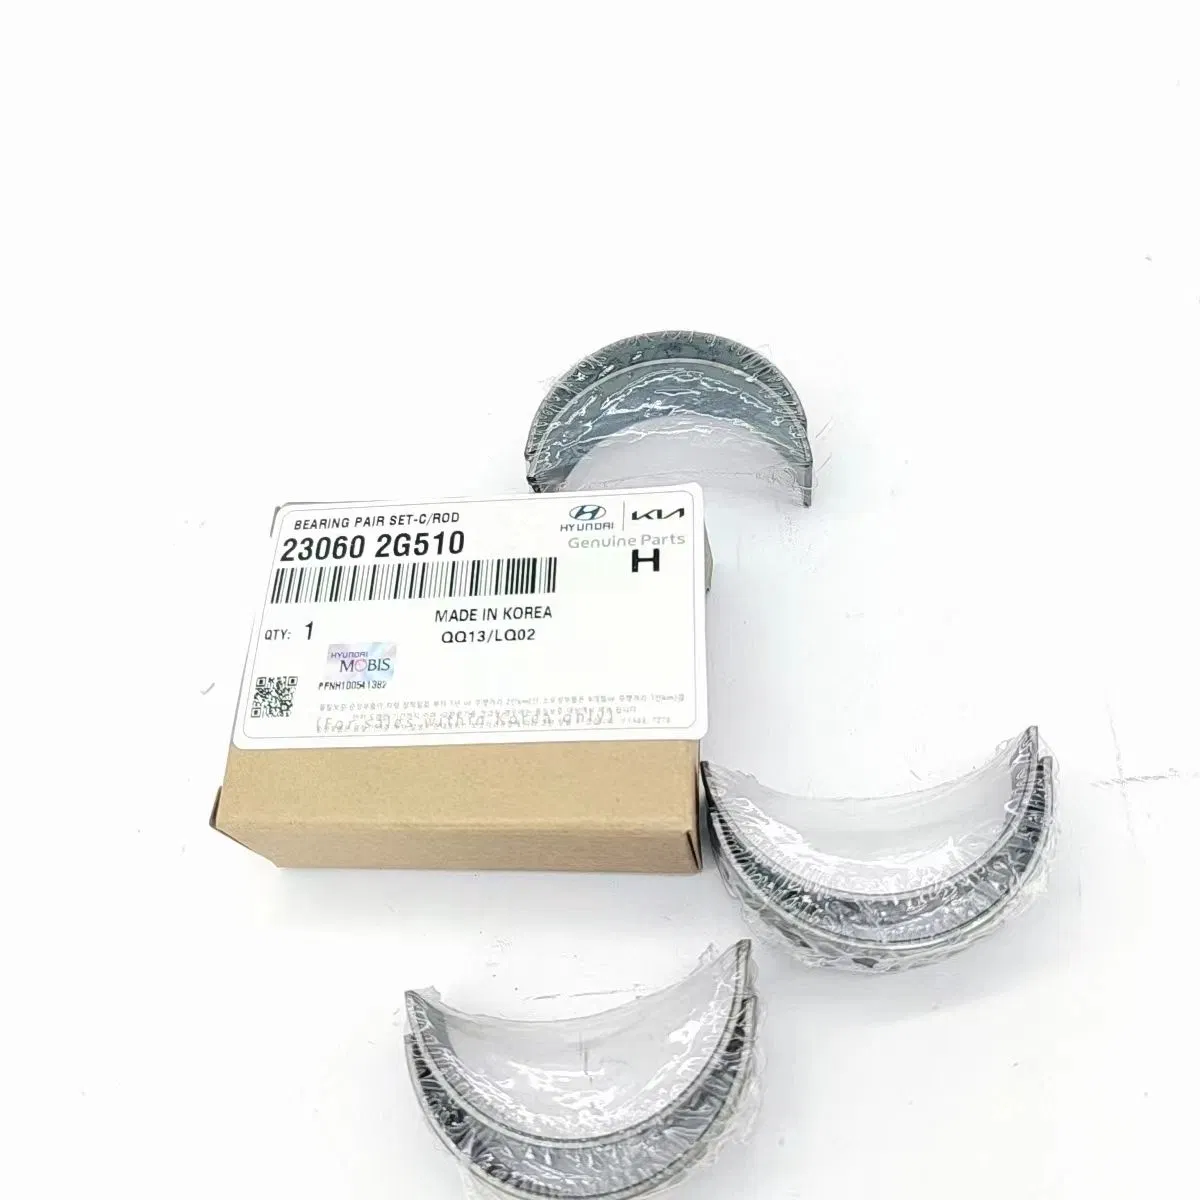 23060-2g510 for Hyundai Connecting Rod Bearing Connecting Rod Bearing Shell